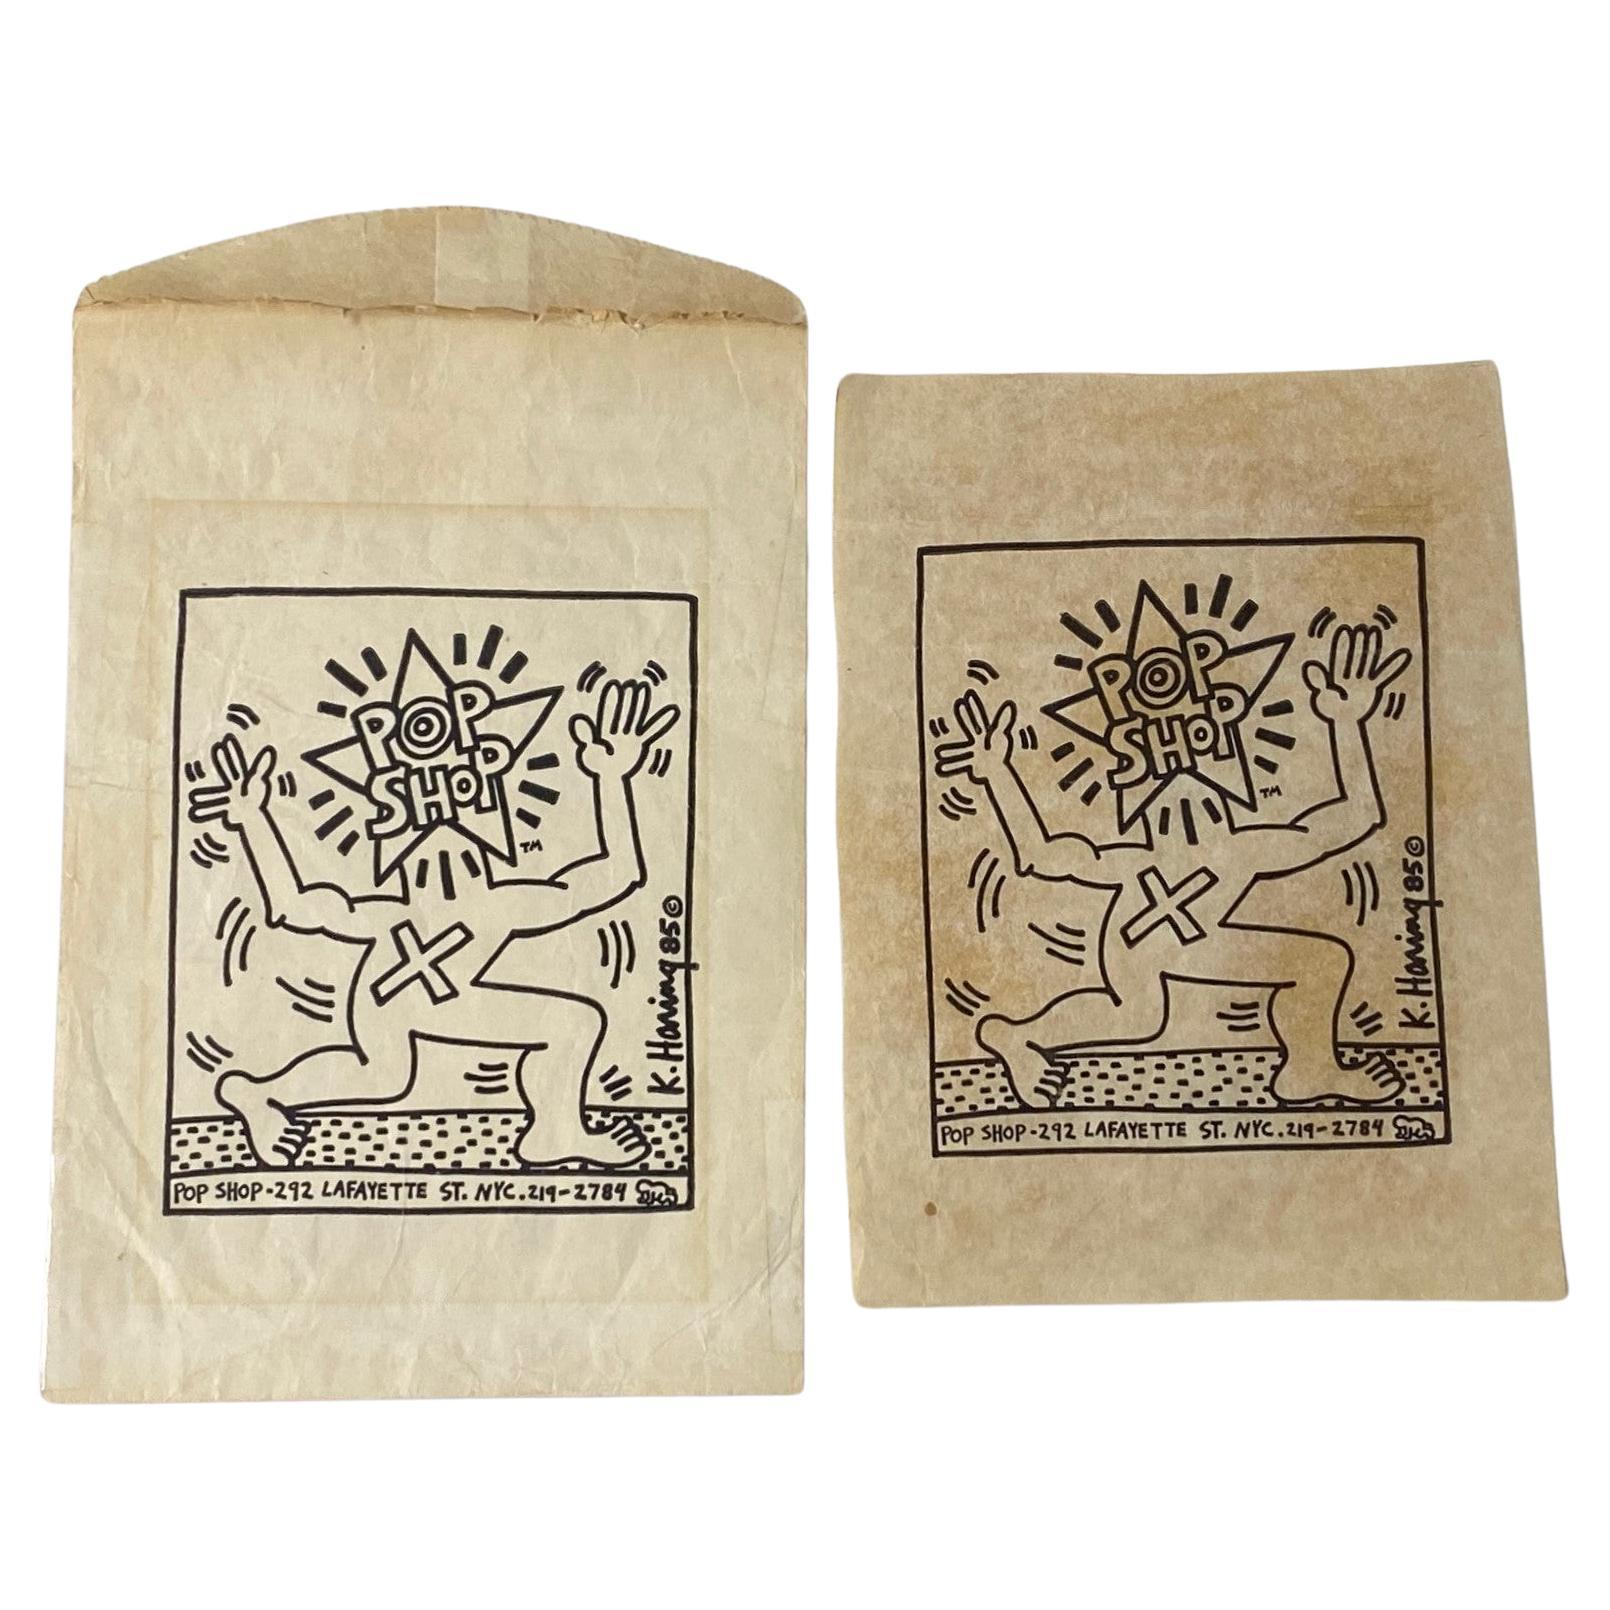 Keith Haring Original New York City Pop Shop Lithograph Bag With Bonus, 1980s For Sale